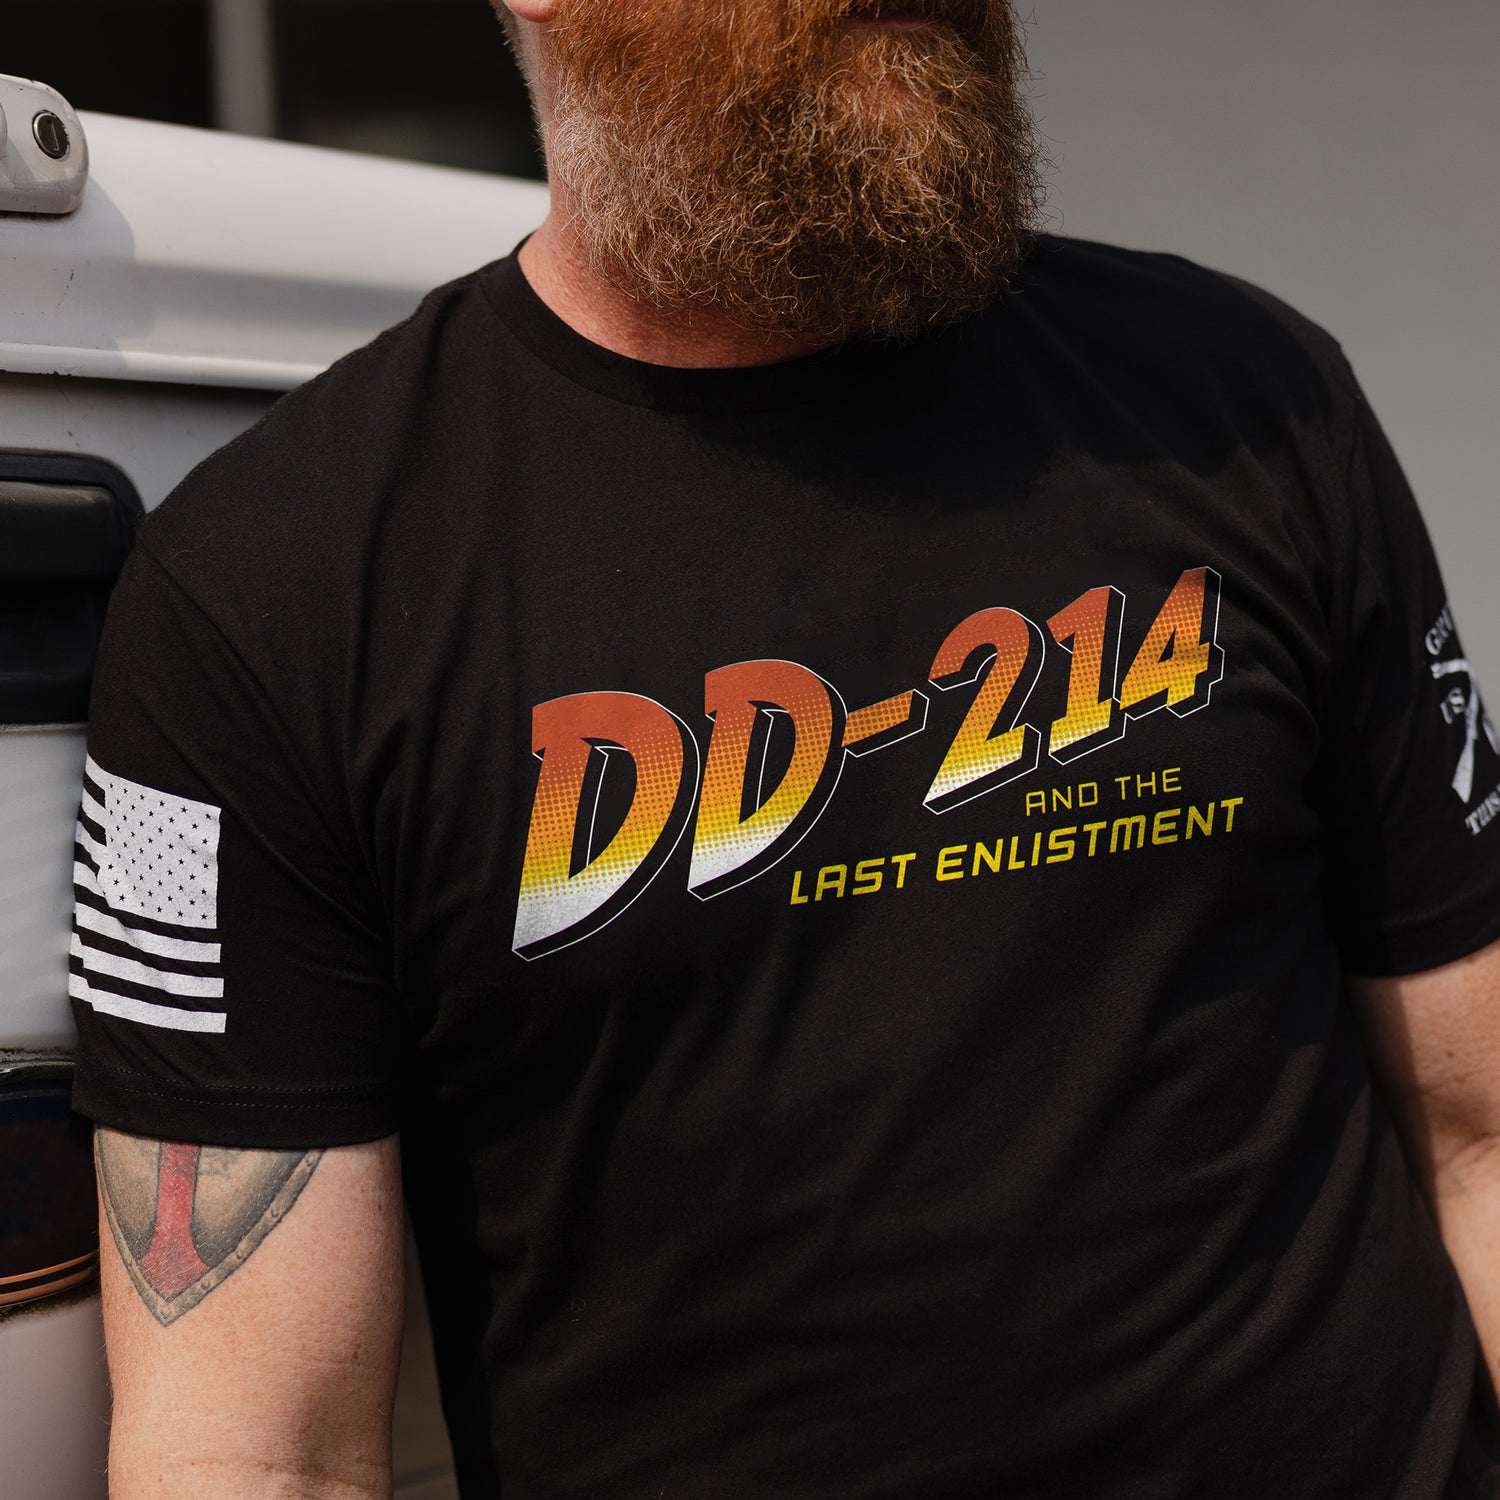 Veteran Shirt - DD214 